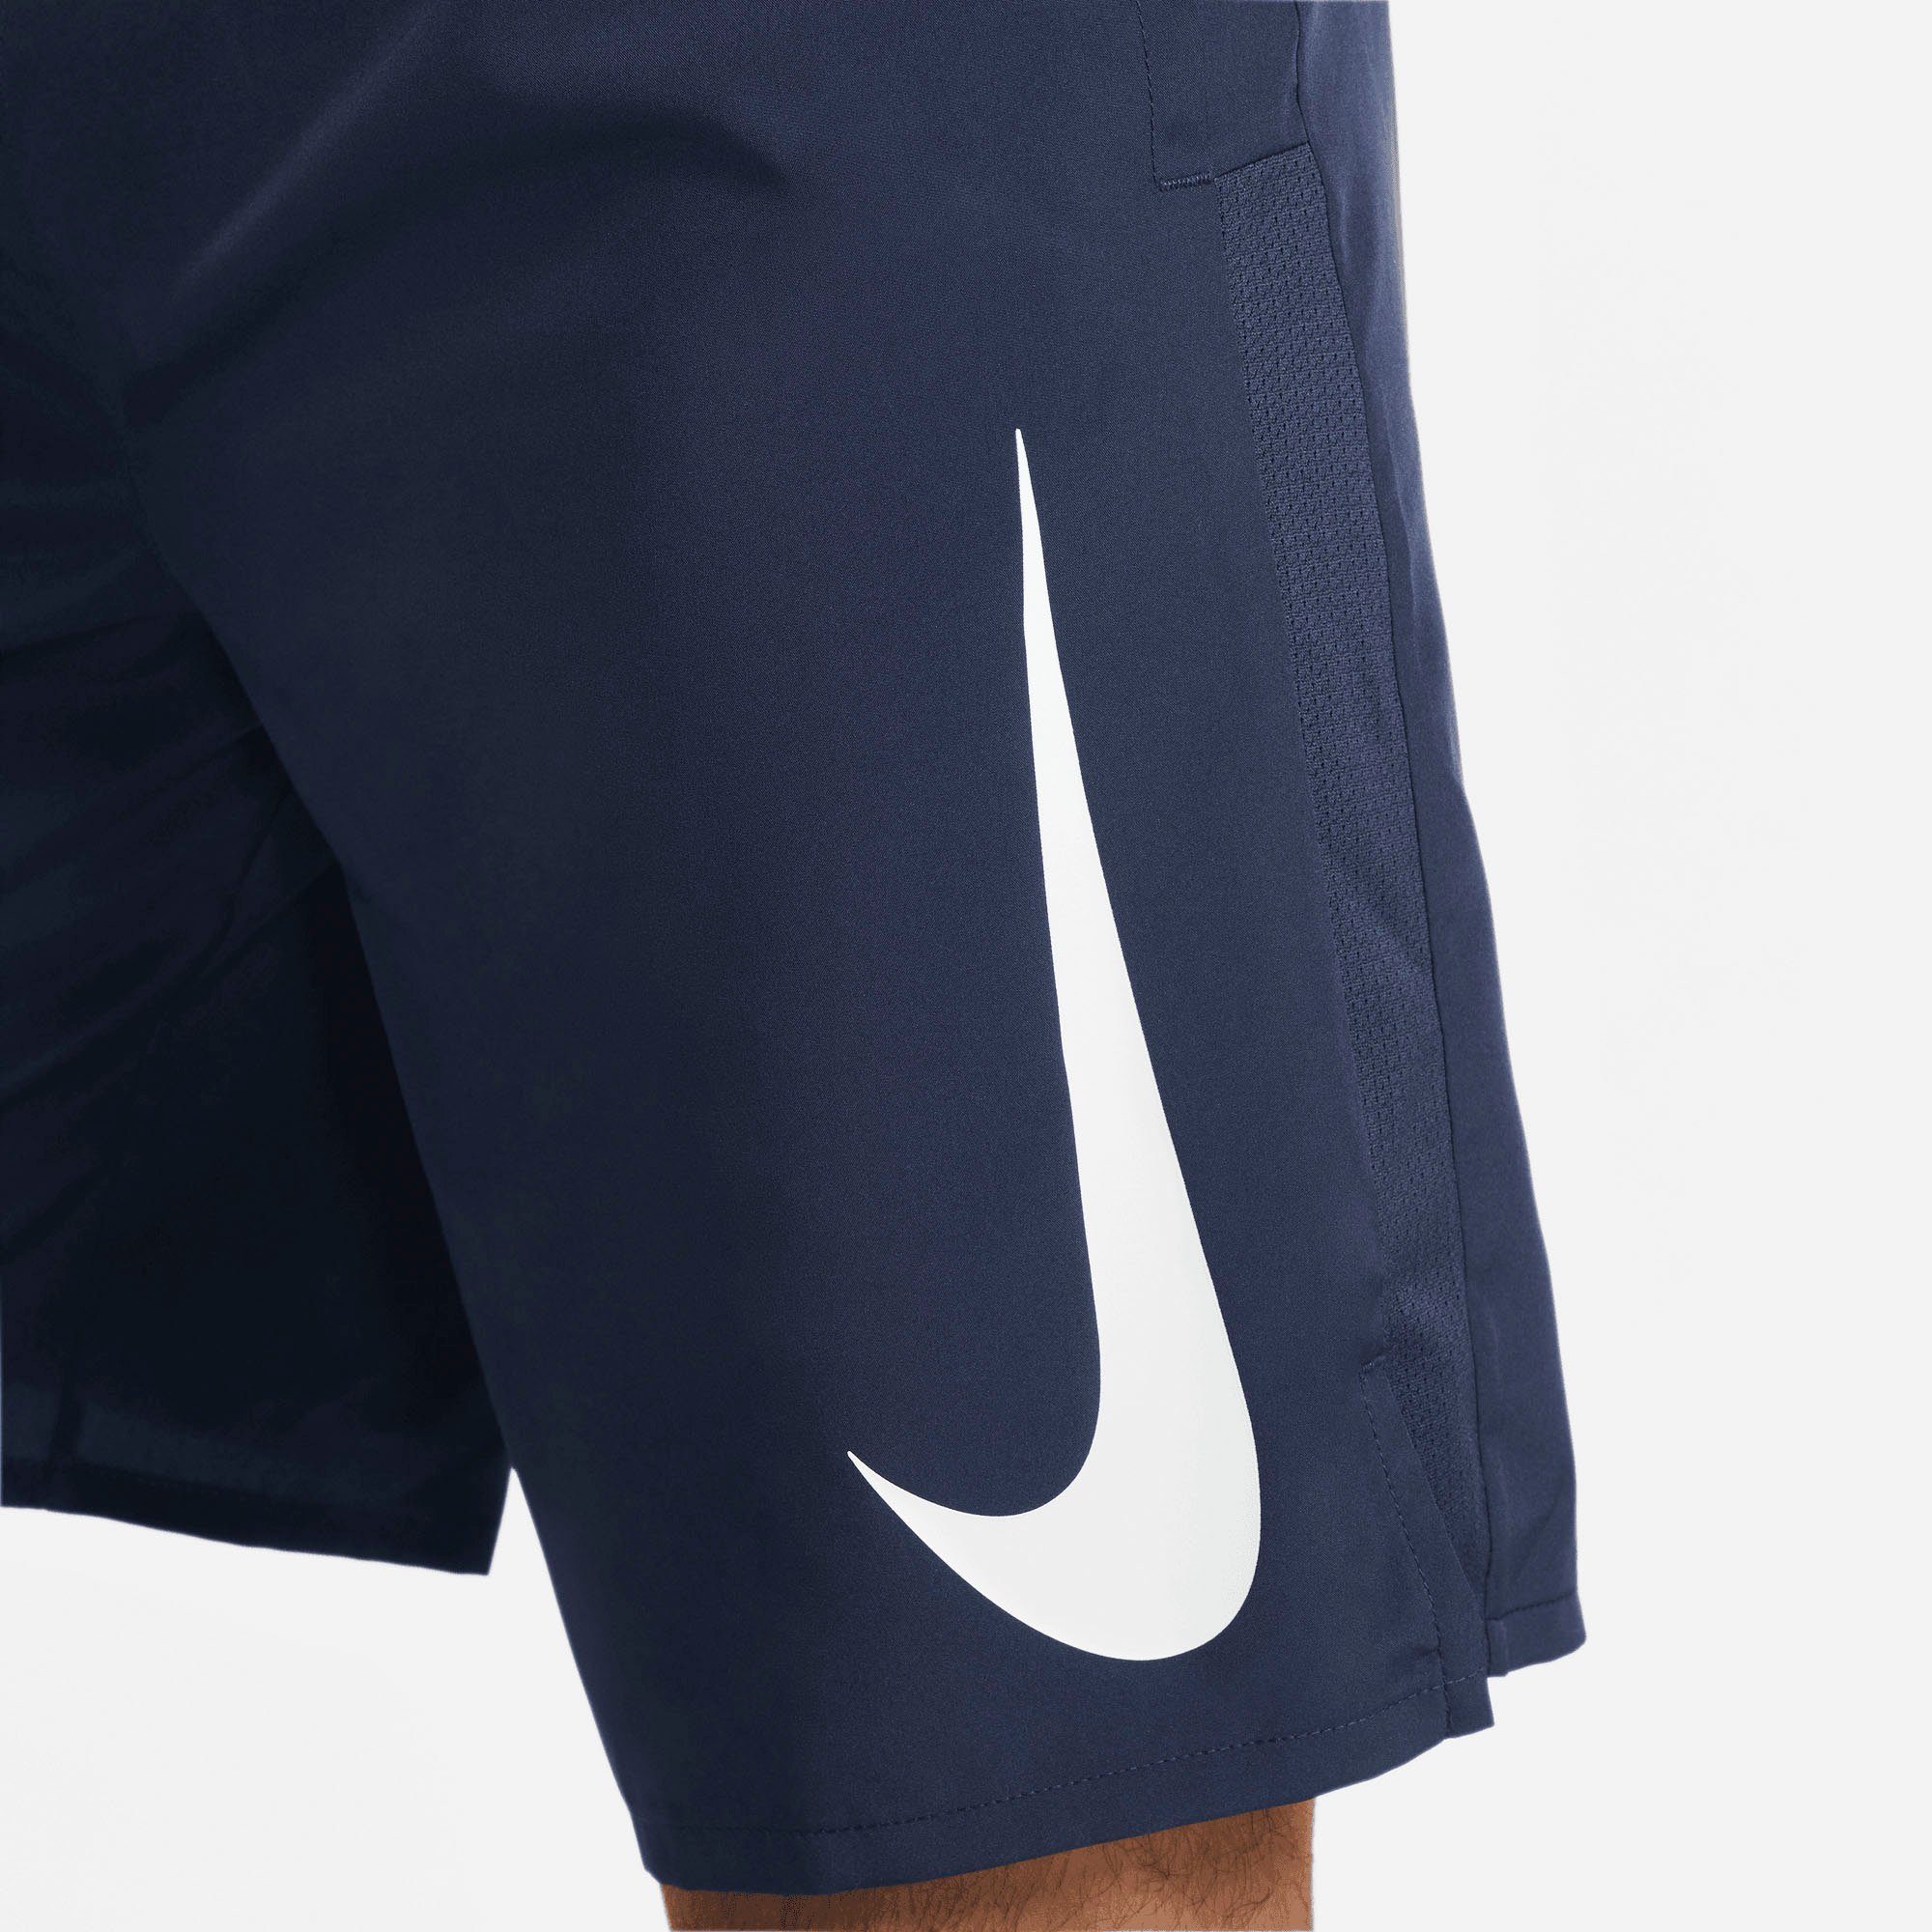 Nike Laufshorts Dri-FIT " Unlined Men's blau Shorts Challenger Running